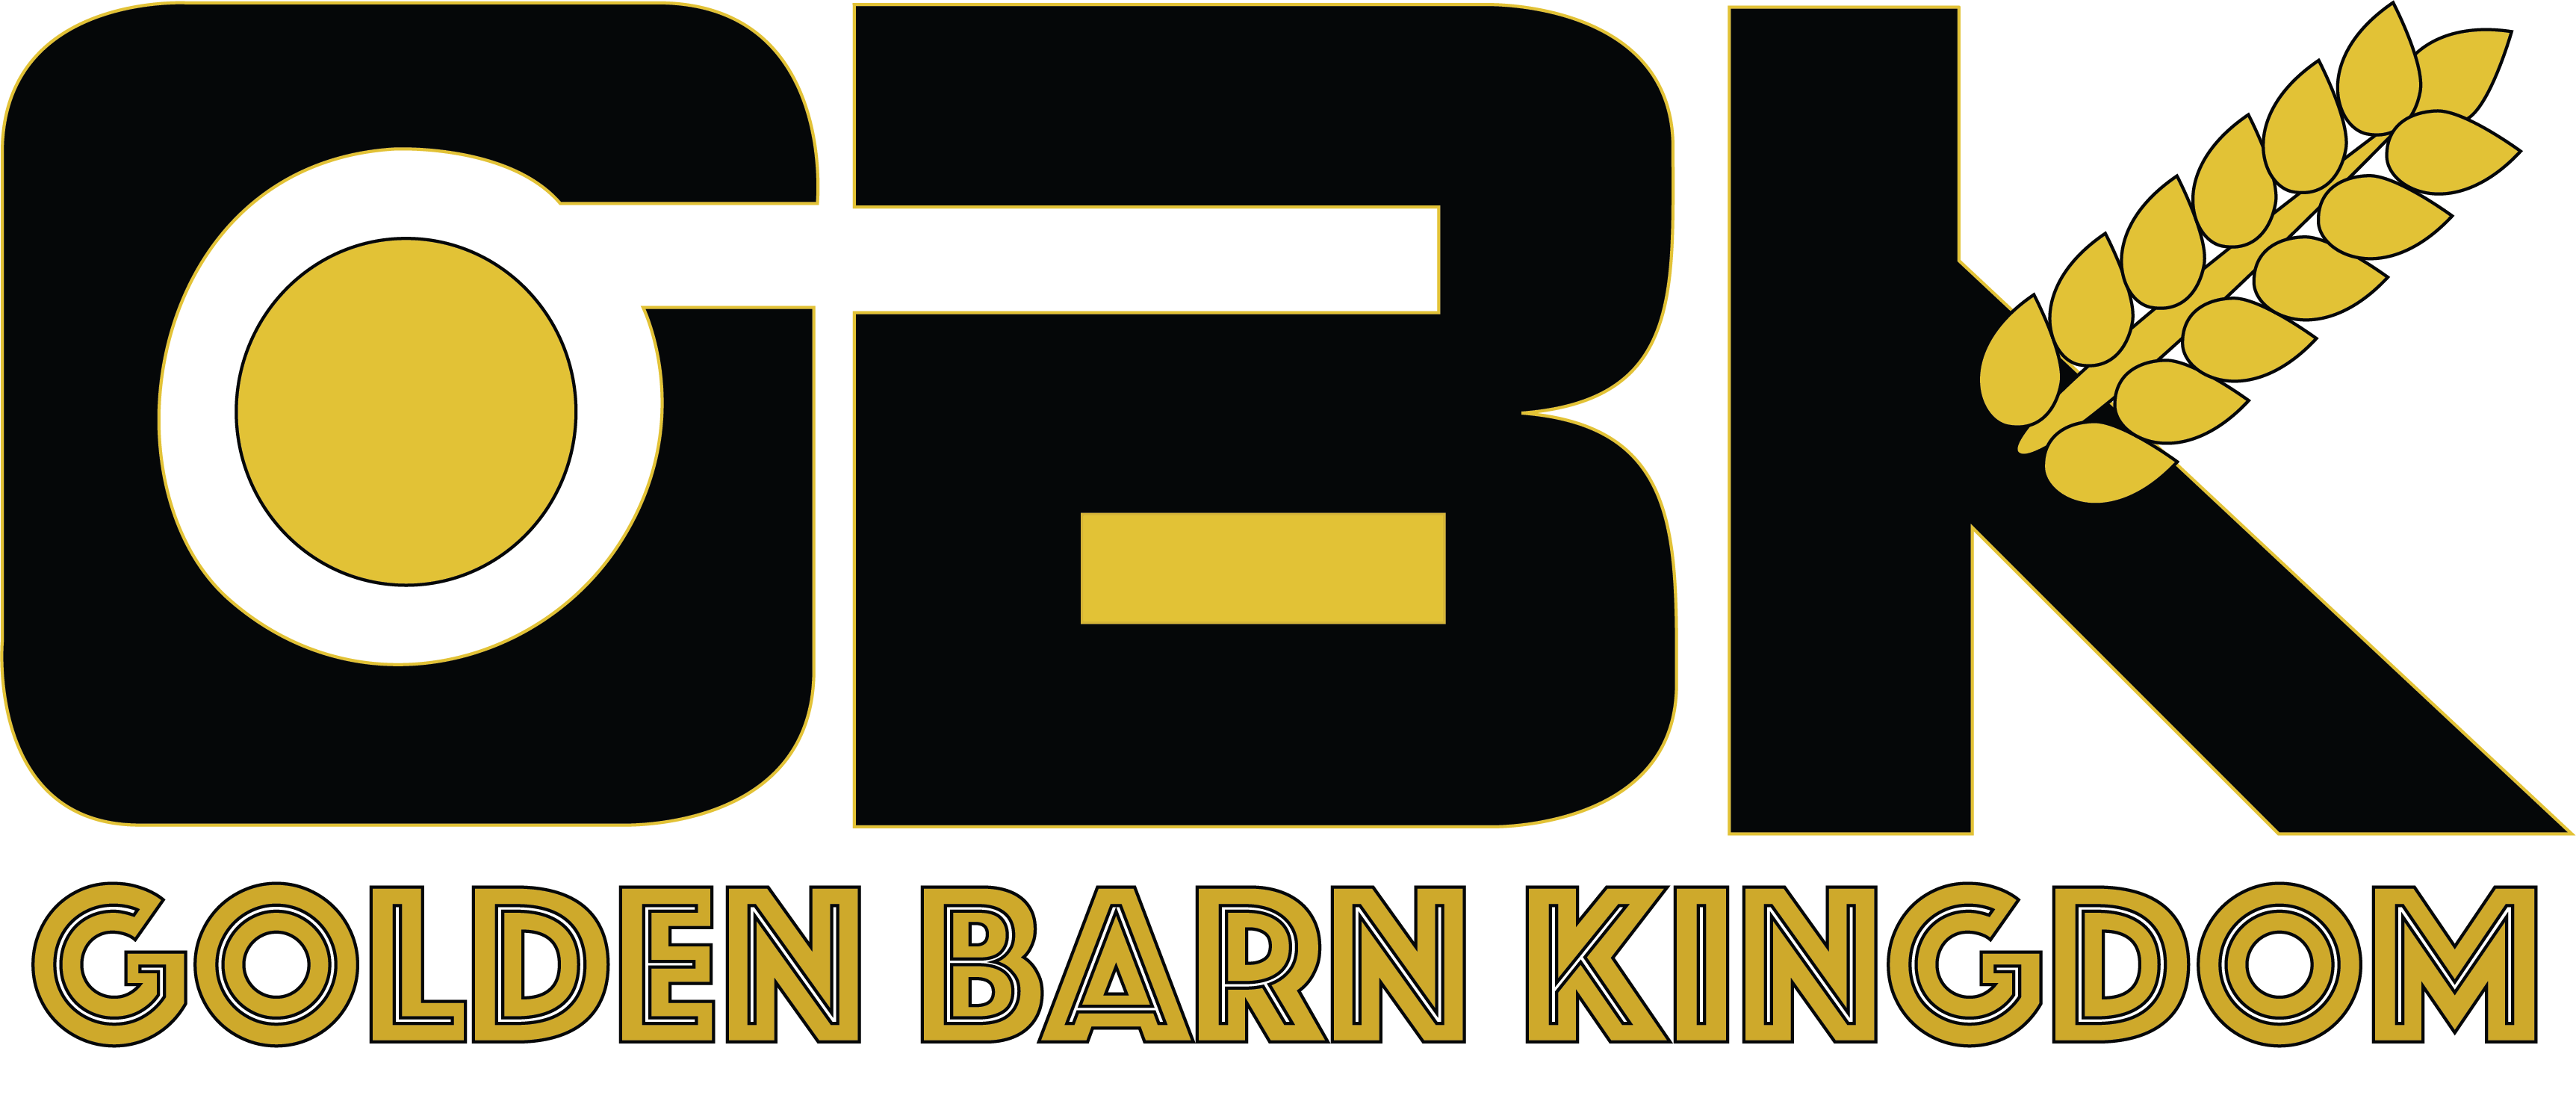 Golden Barn Kingdom